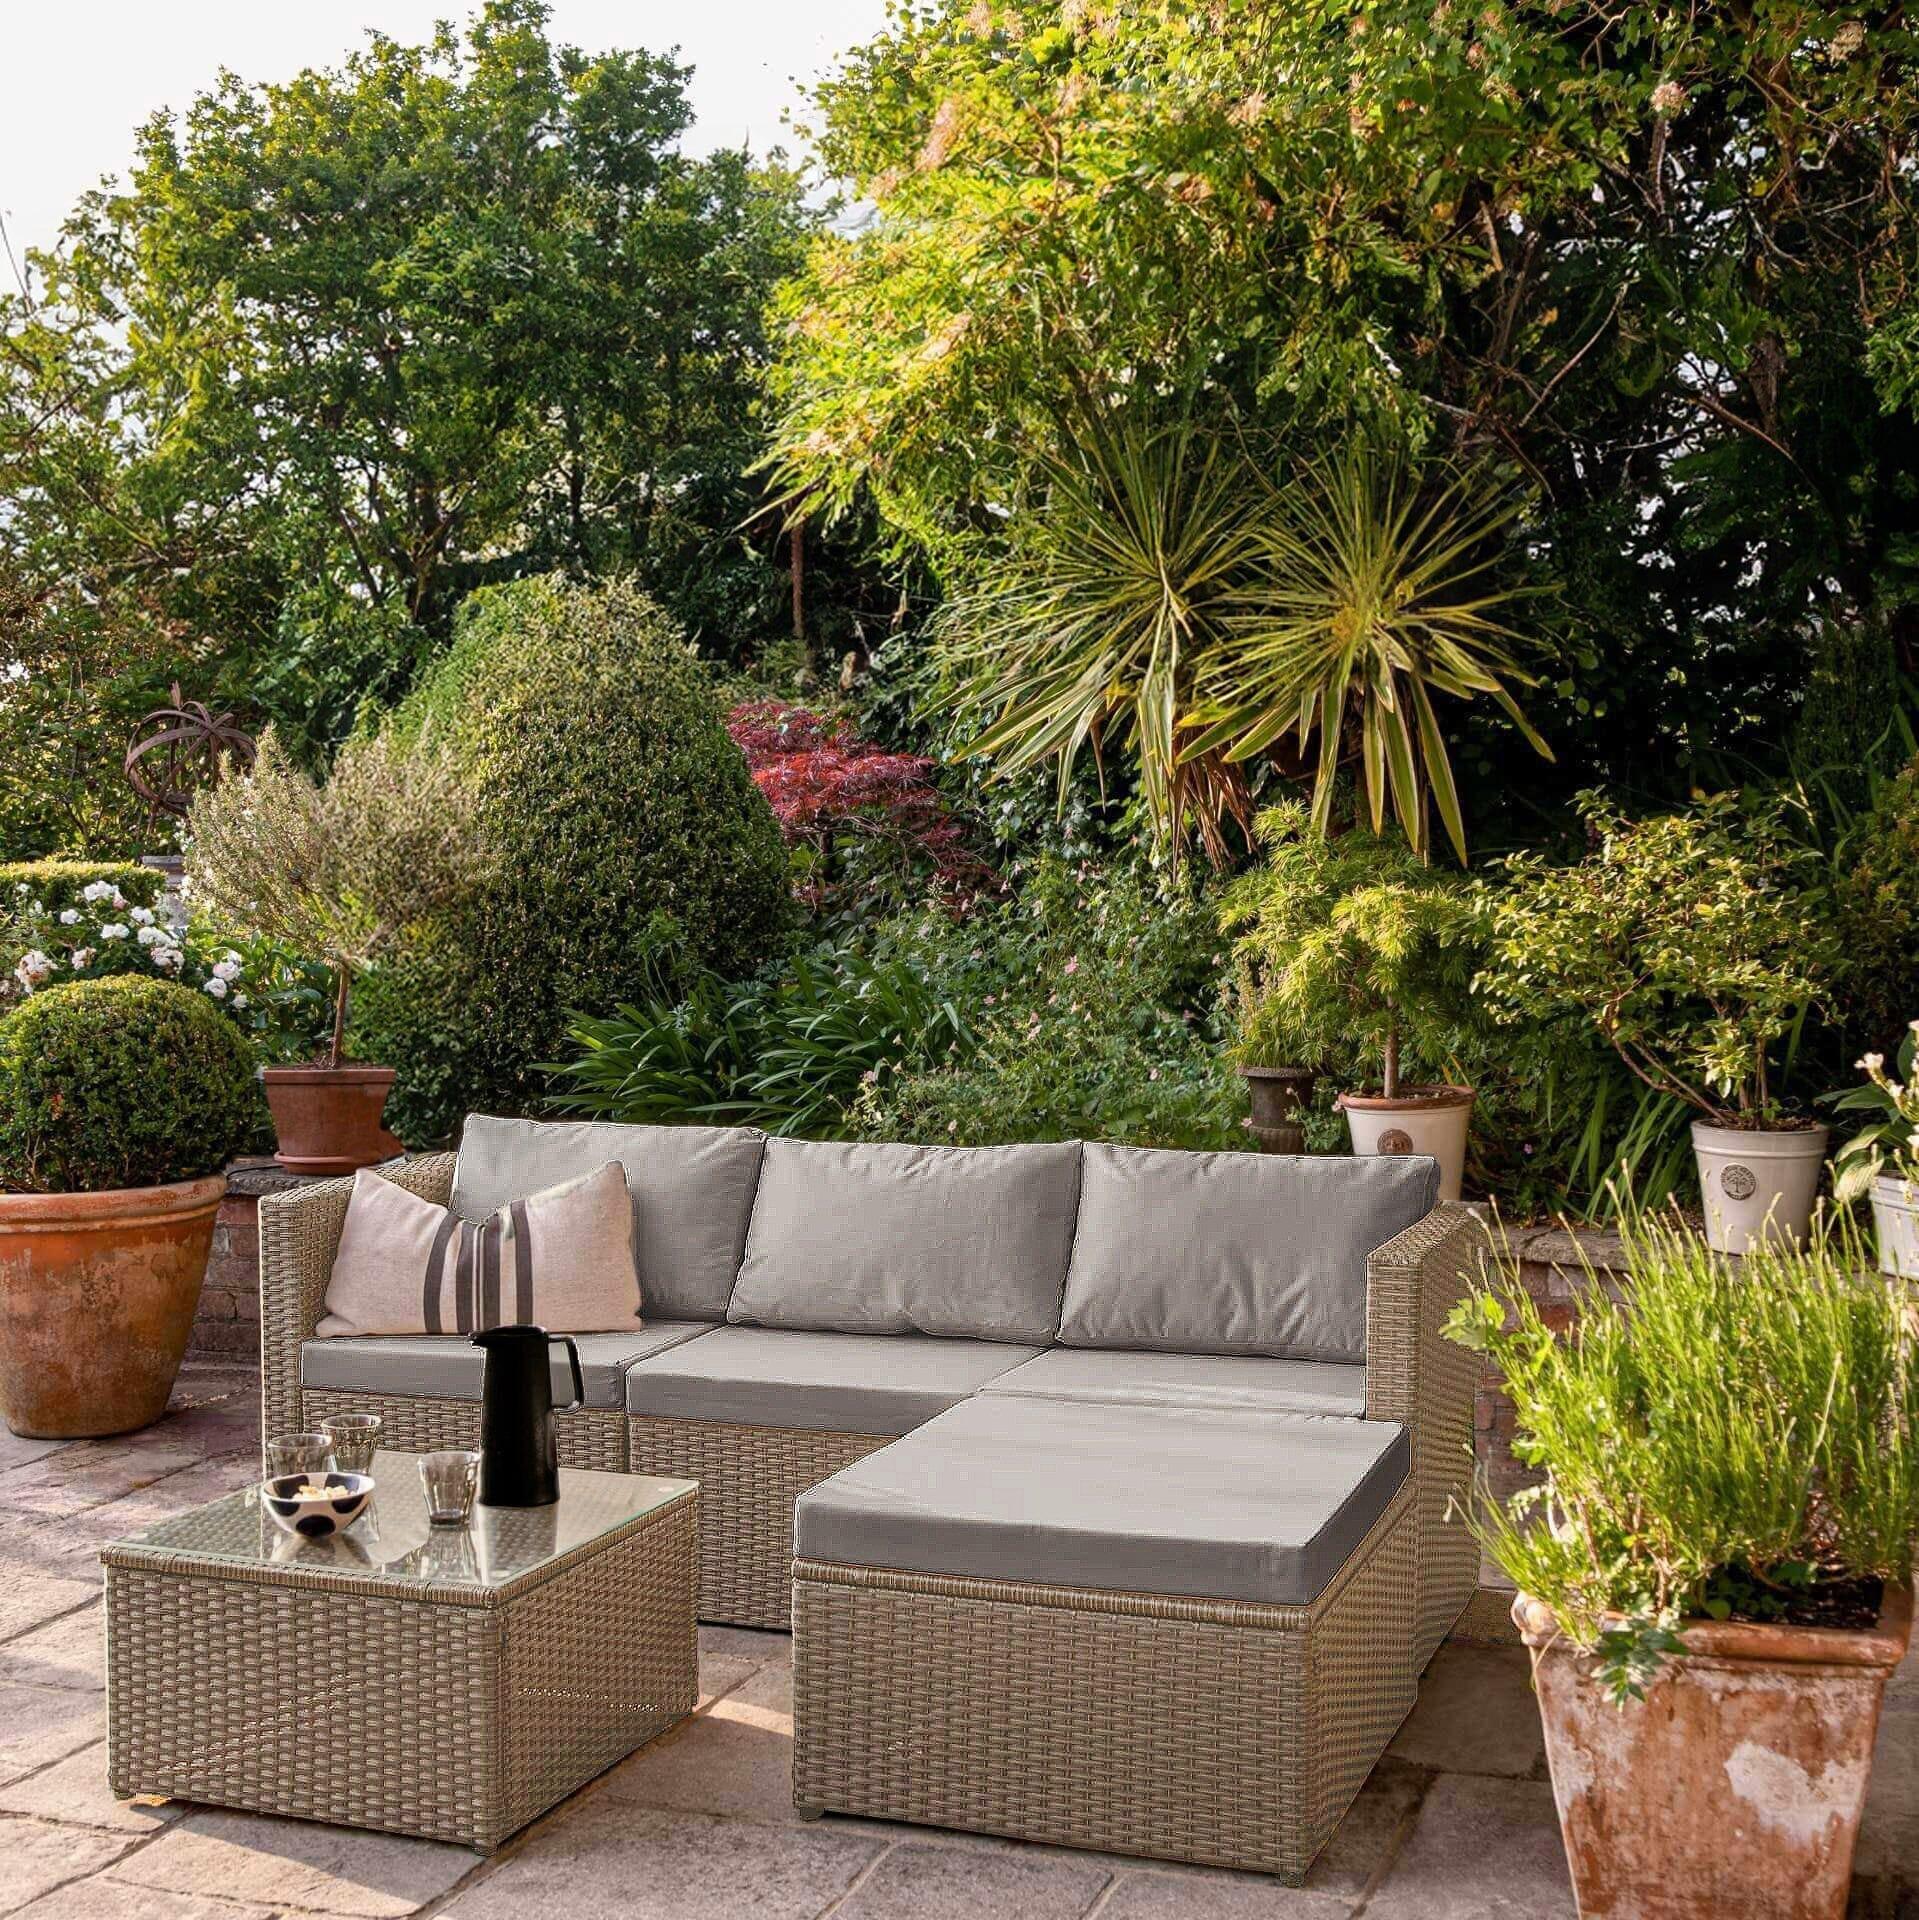 Weston 4 Seater Rattan Corner Sofa Set with Grey Lean Over Parasol - Natural Weave